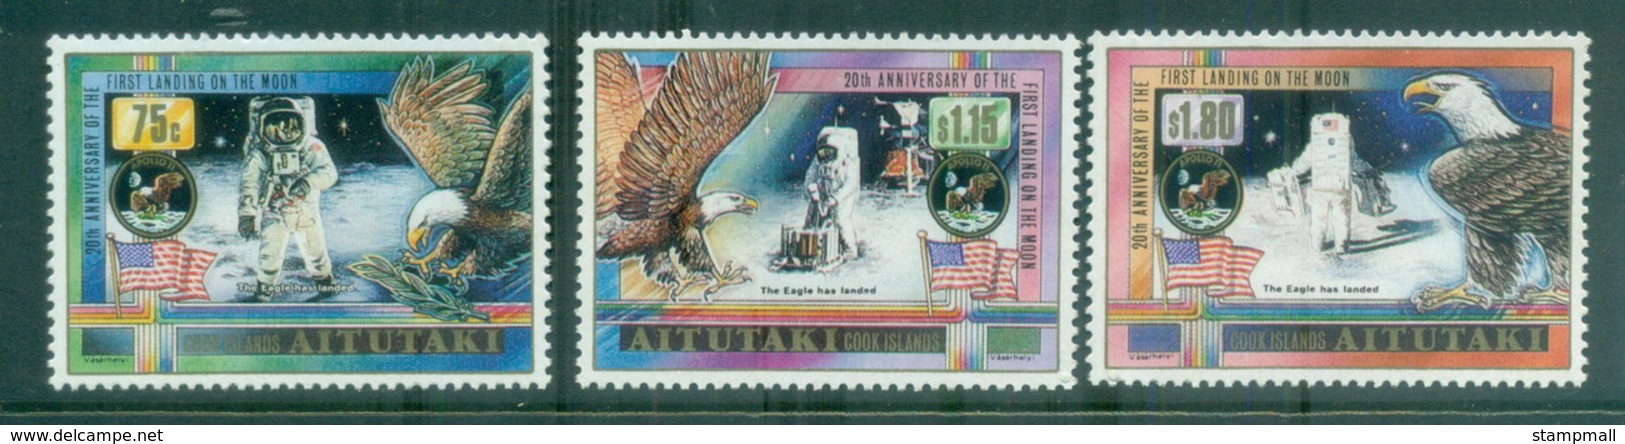 Aitutaki 1989 Space, Moon Landing 20th Anniv.  MUH - Aitutaki